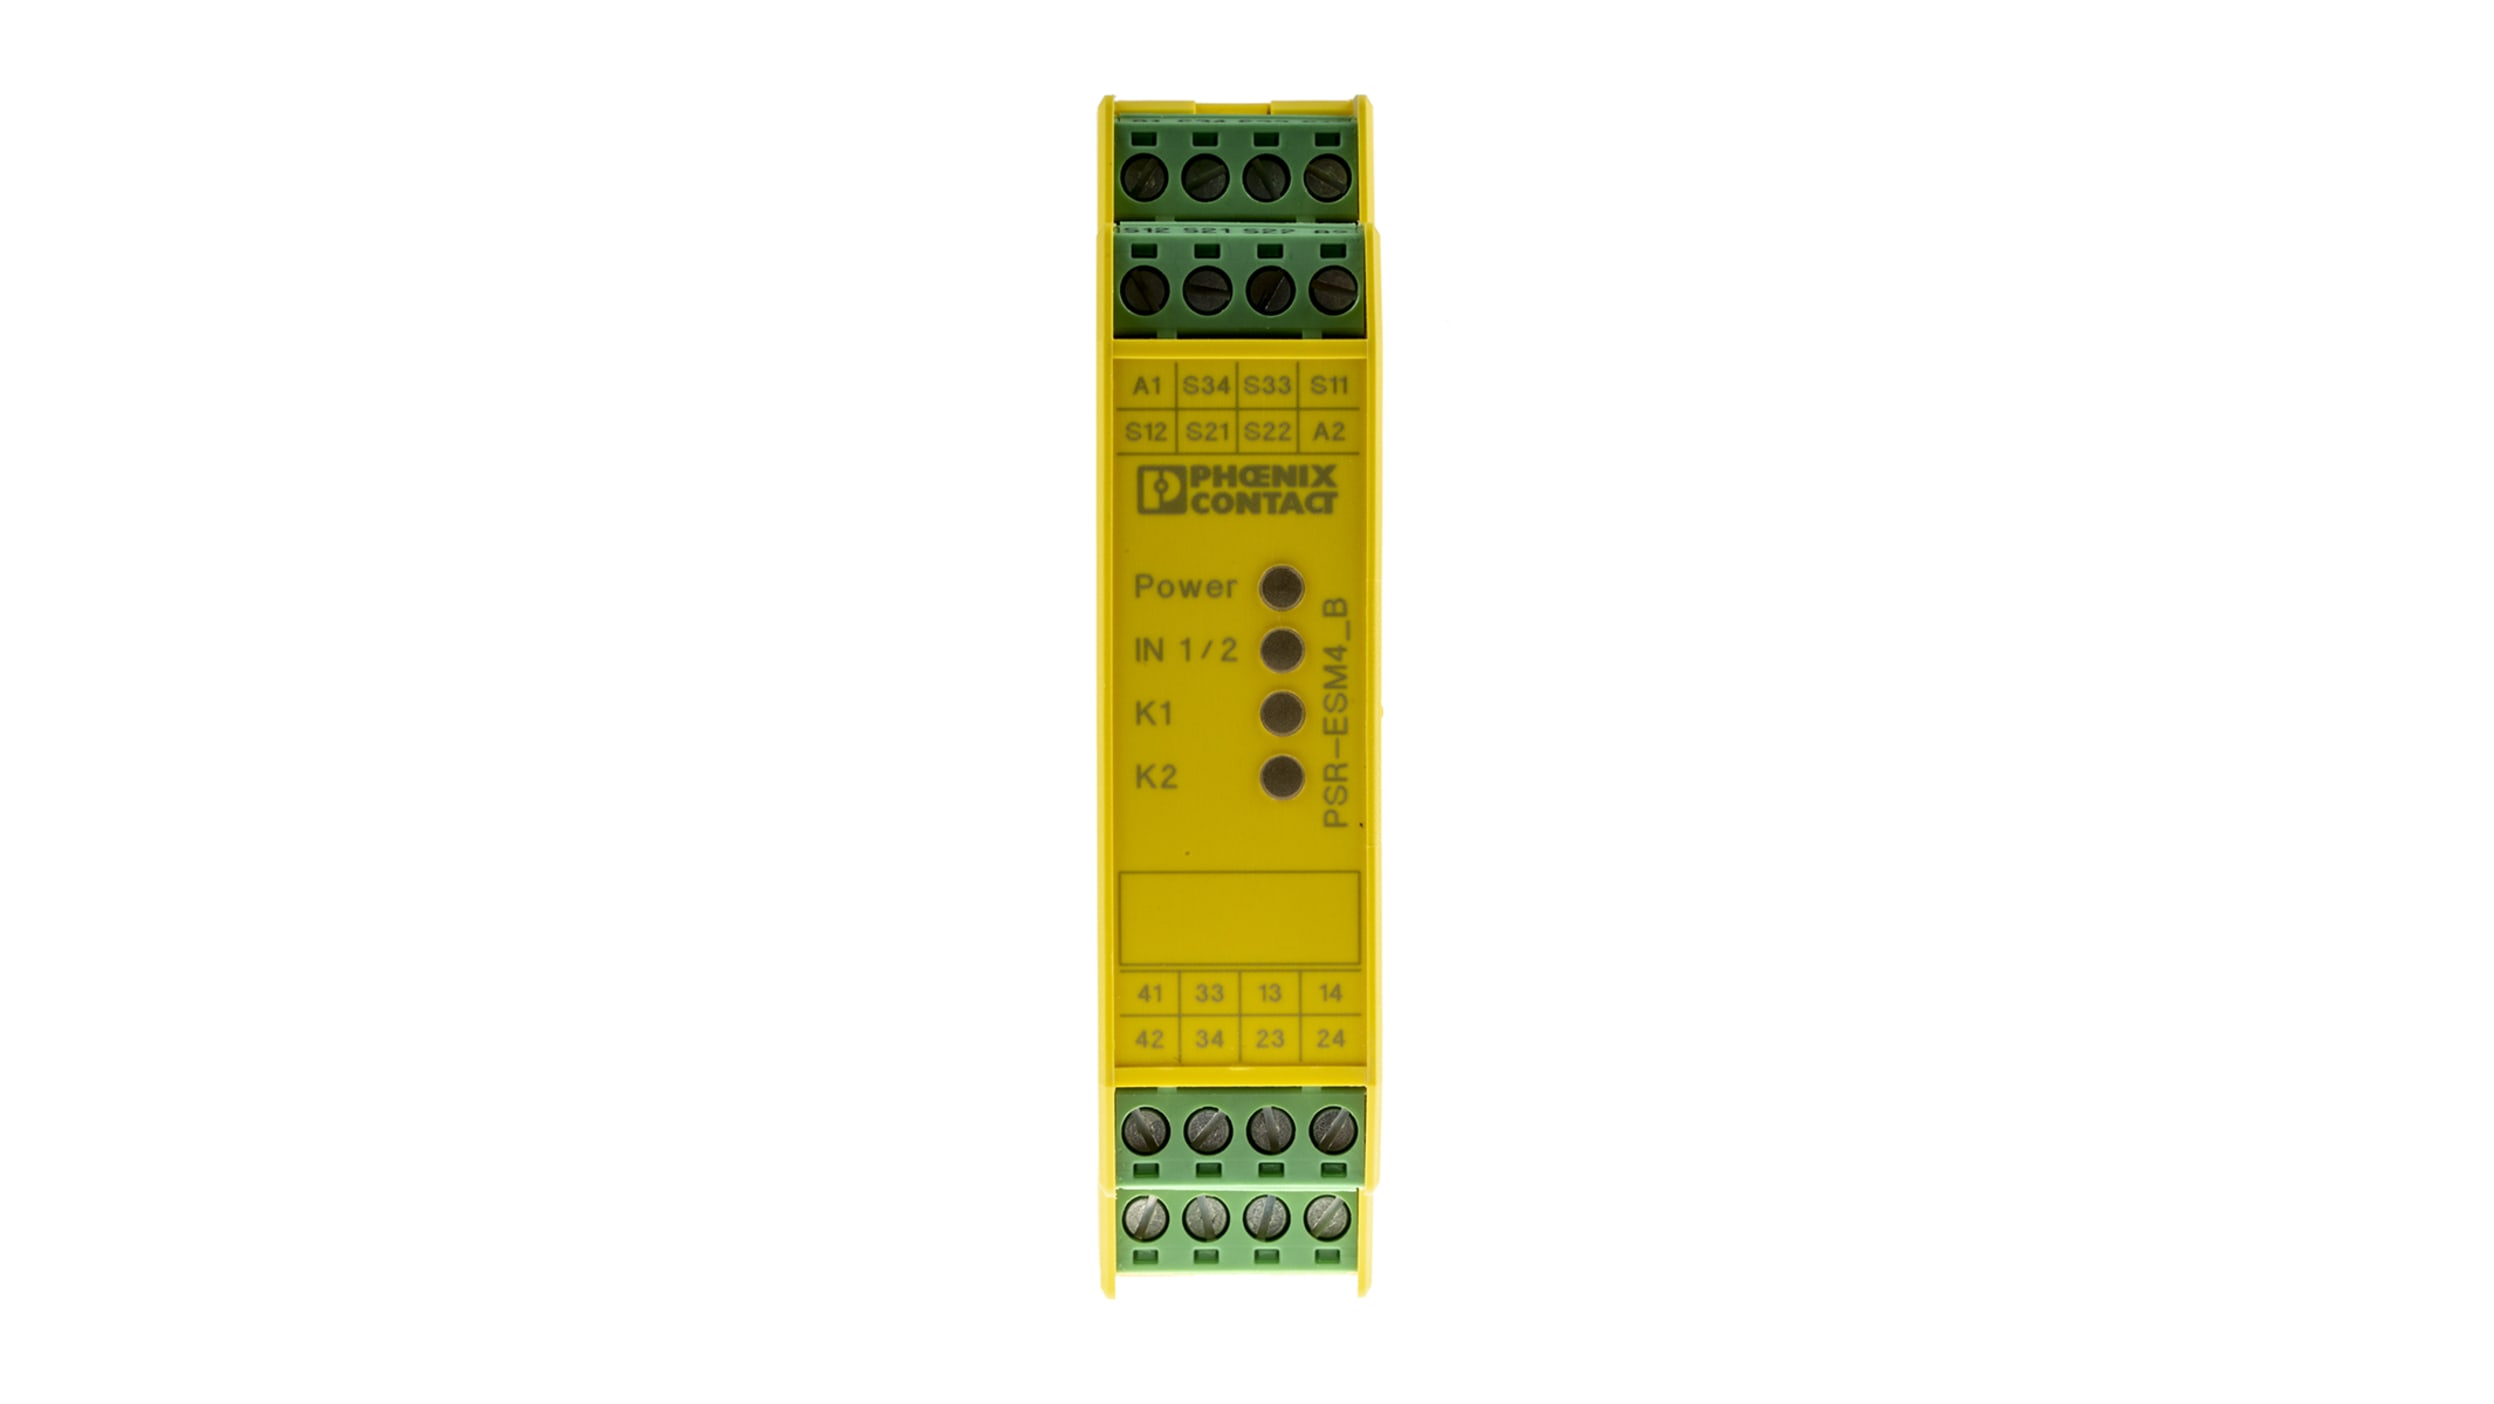 1 PCS NEW IN BOX Phoenix Safety Relay PSR-SCP-24UC/ESM4/3X1/1X2/B